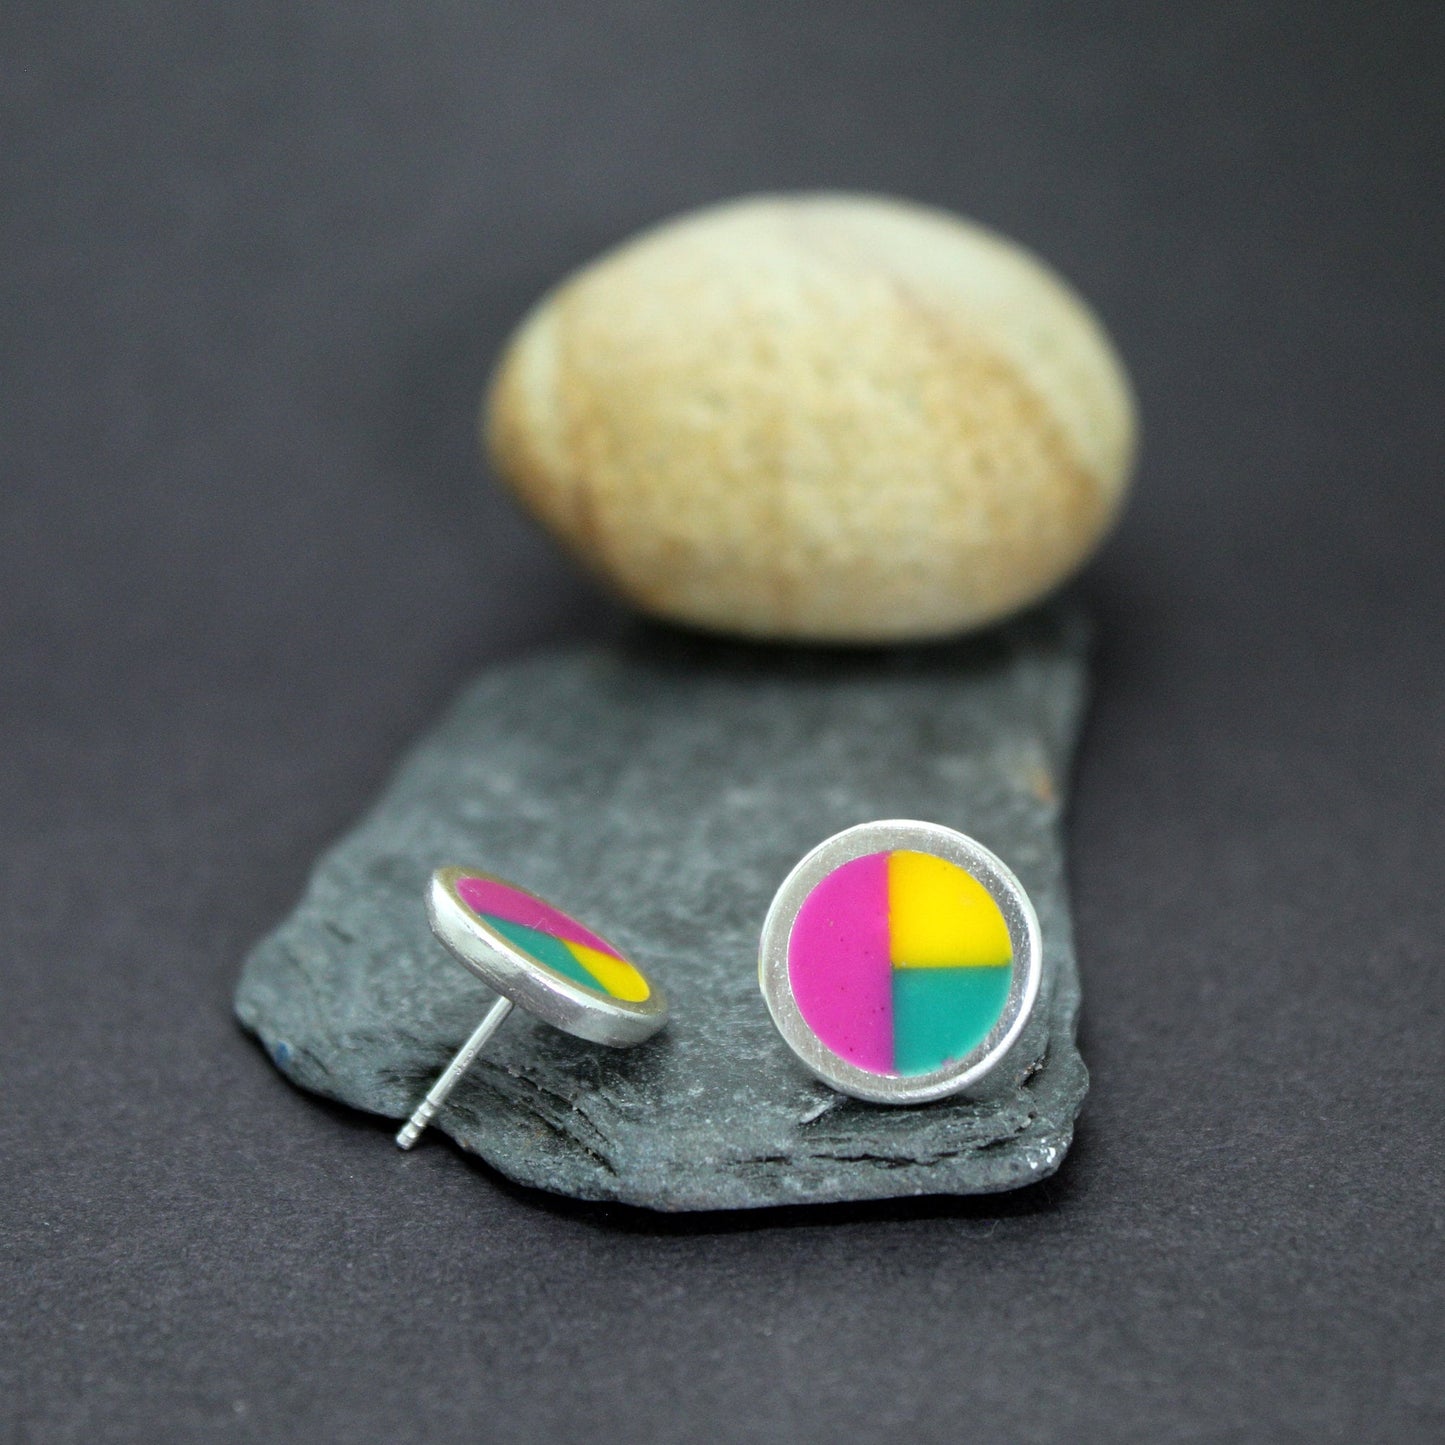 Mark Rothko inspired colored earrings in 925 silver